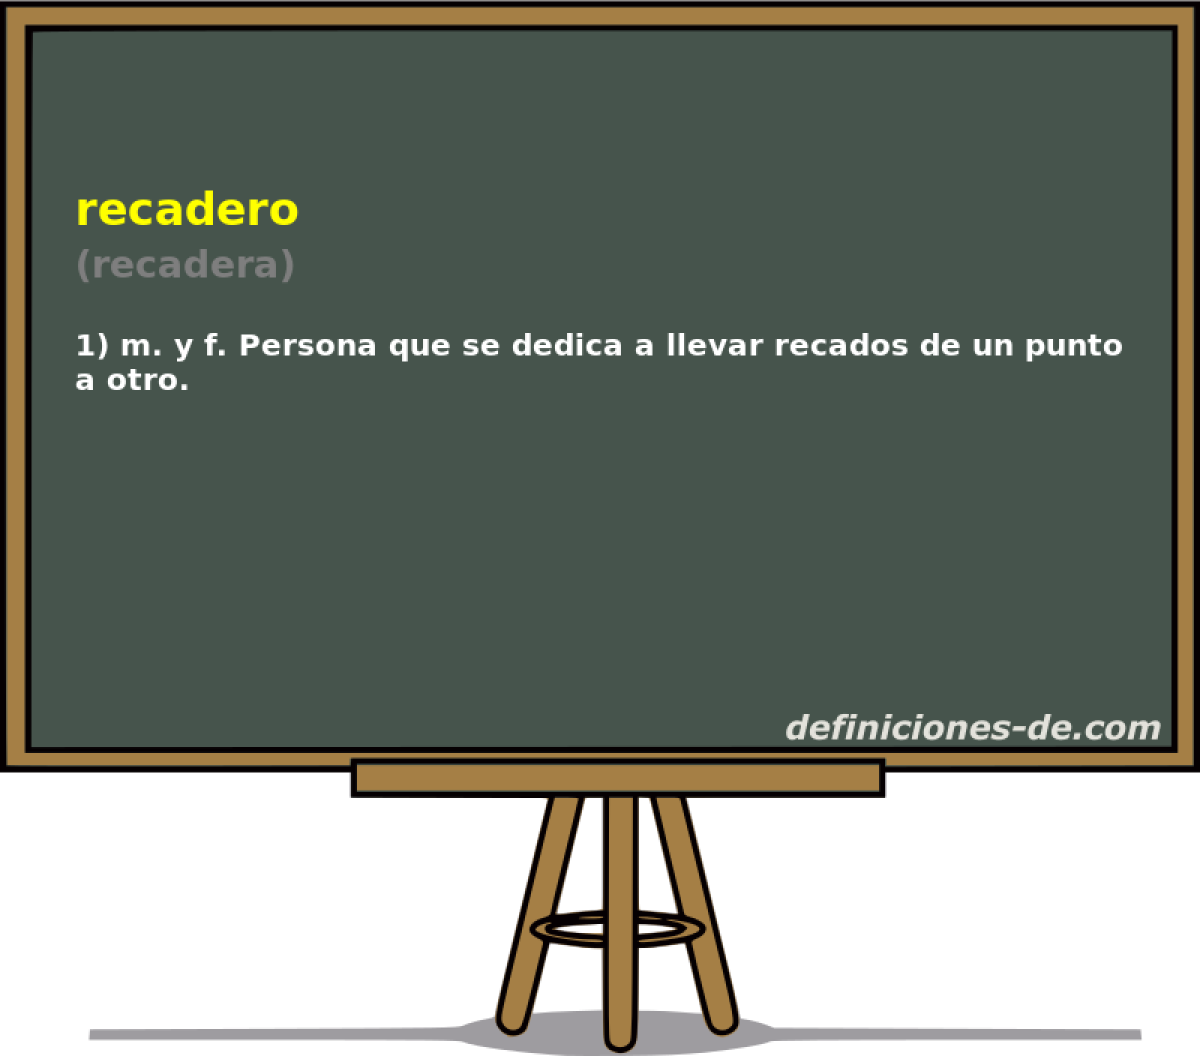 recadero (recadera)